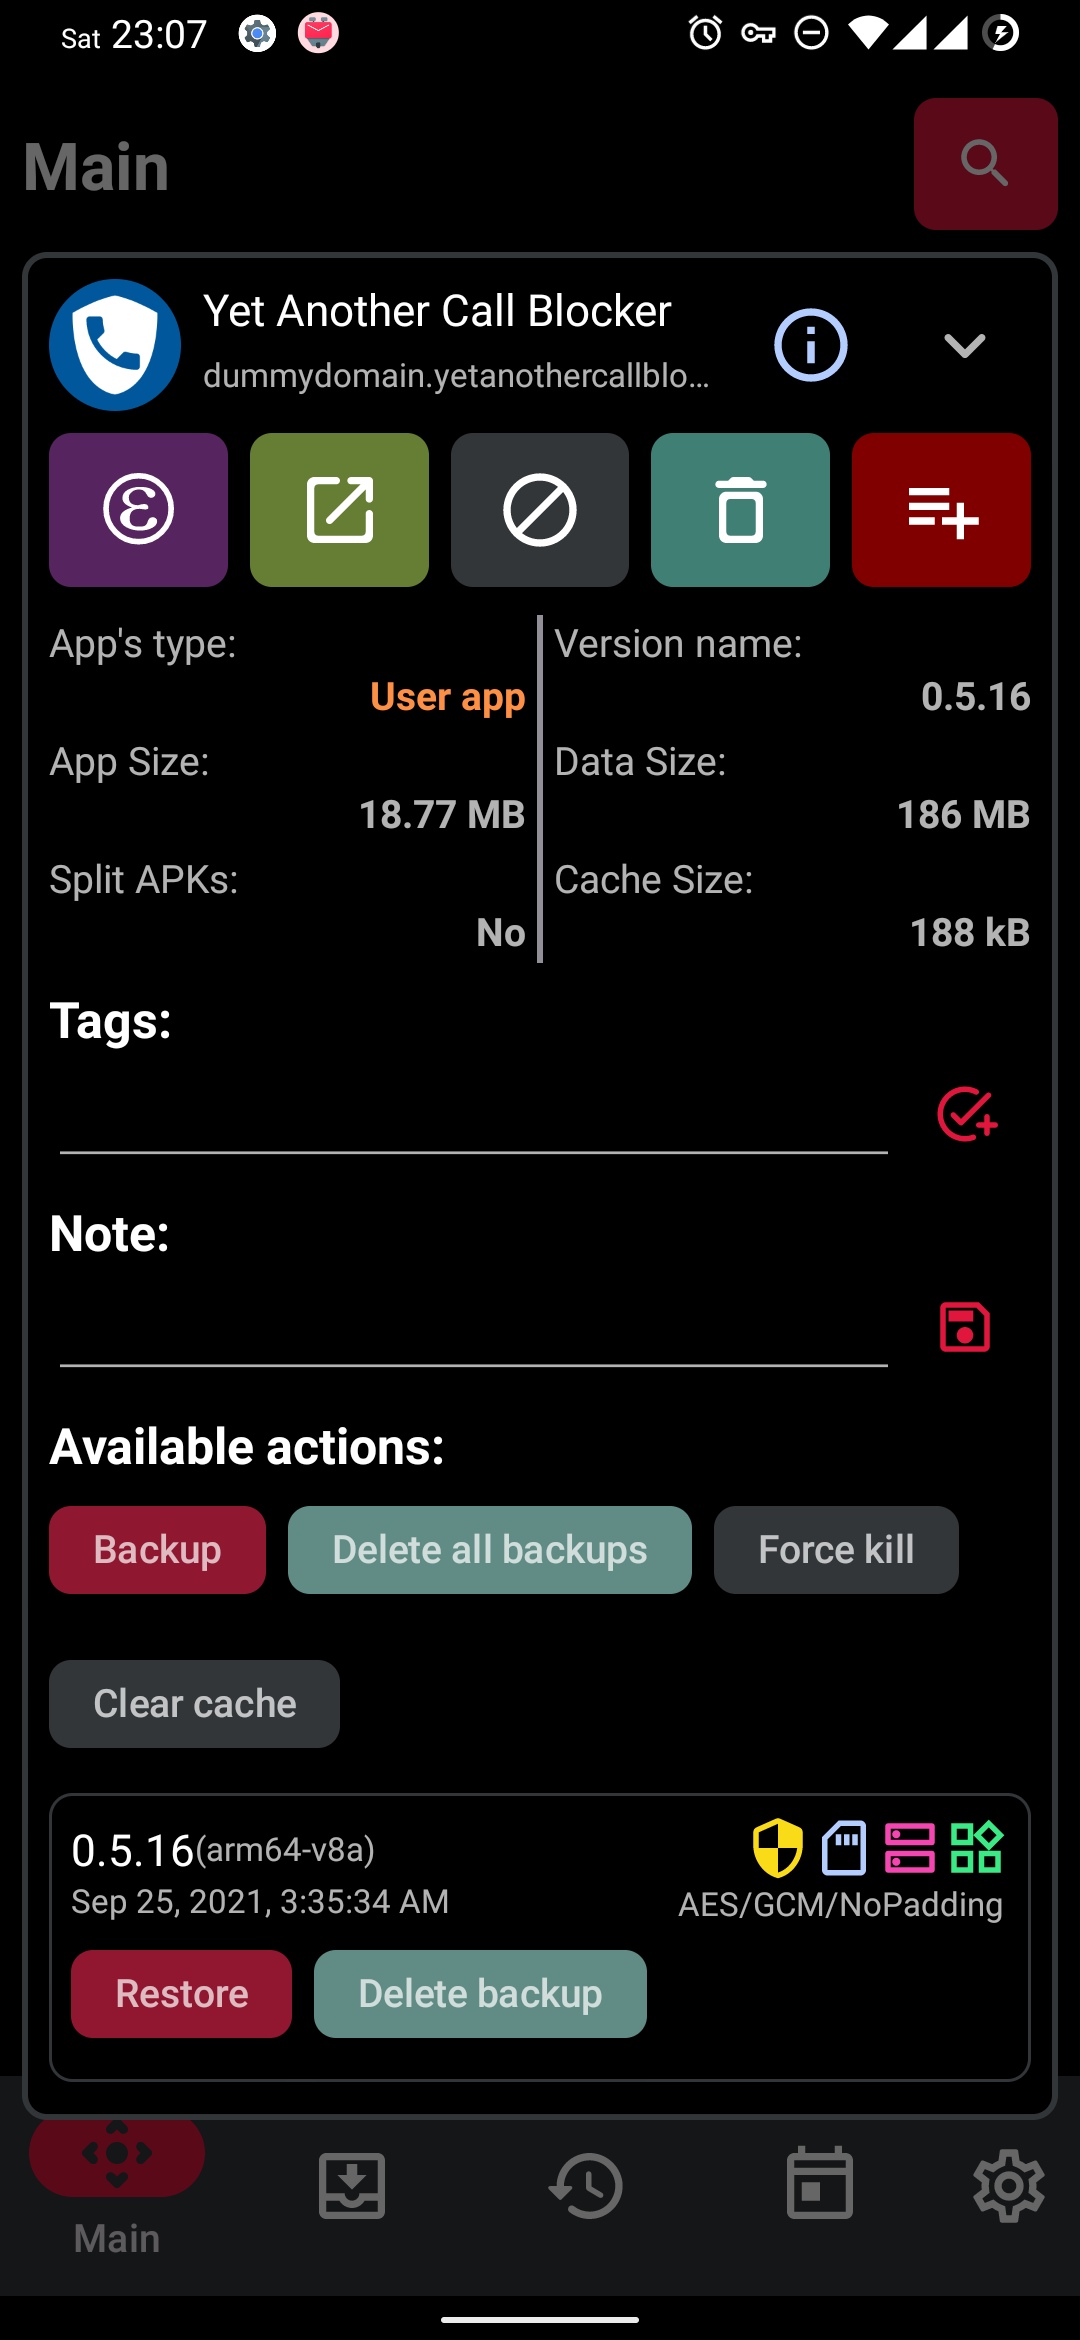 oandbackupx-syncthing-backup-android-phone-restore